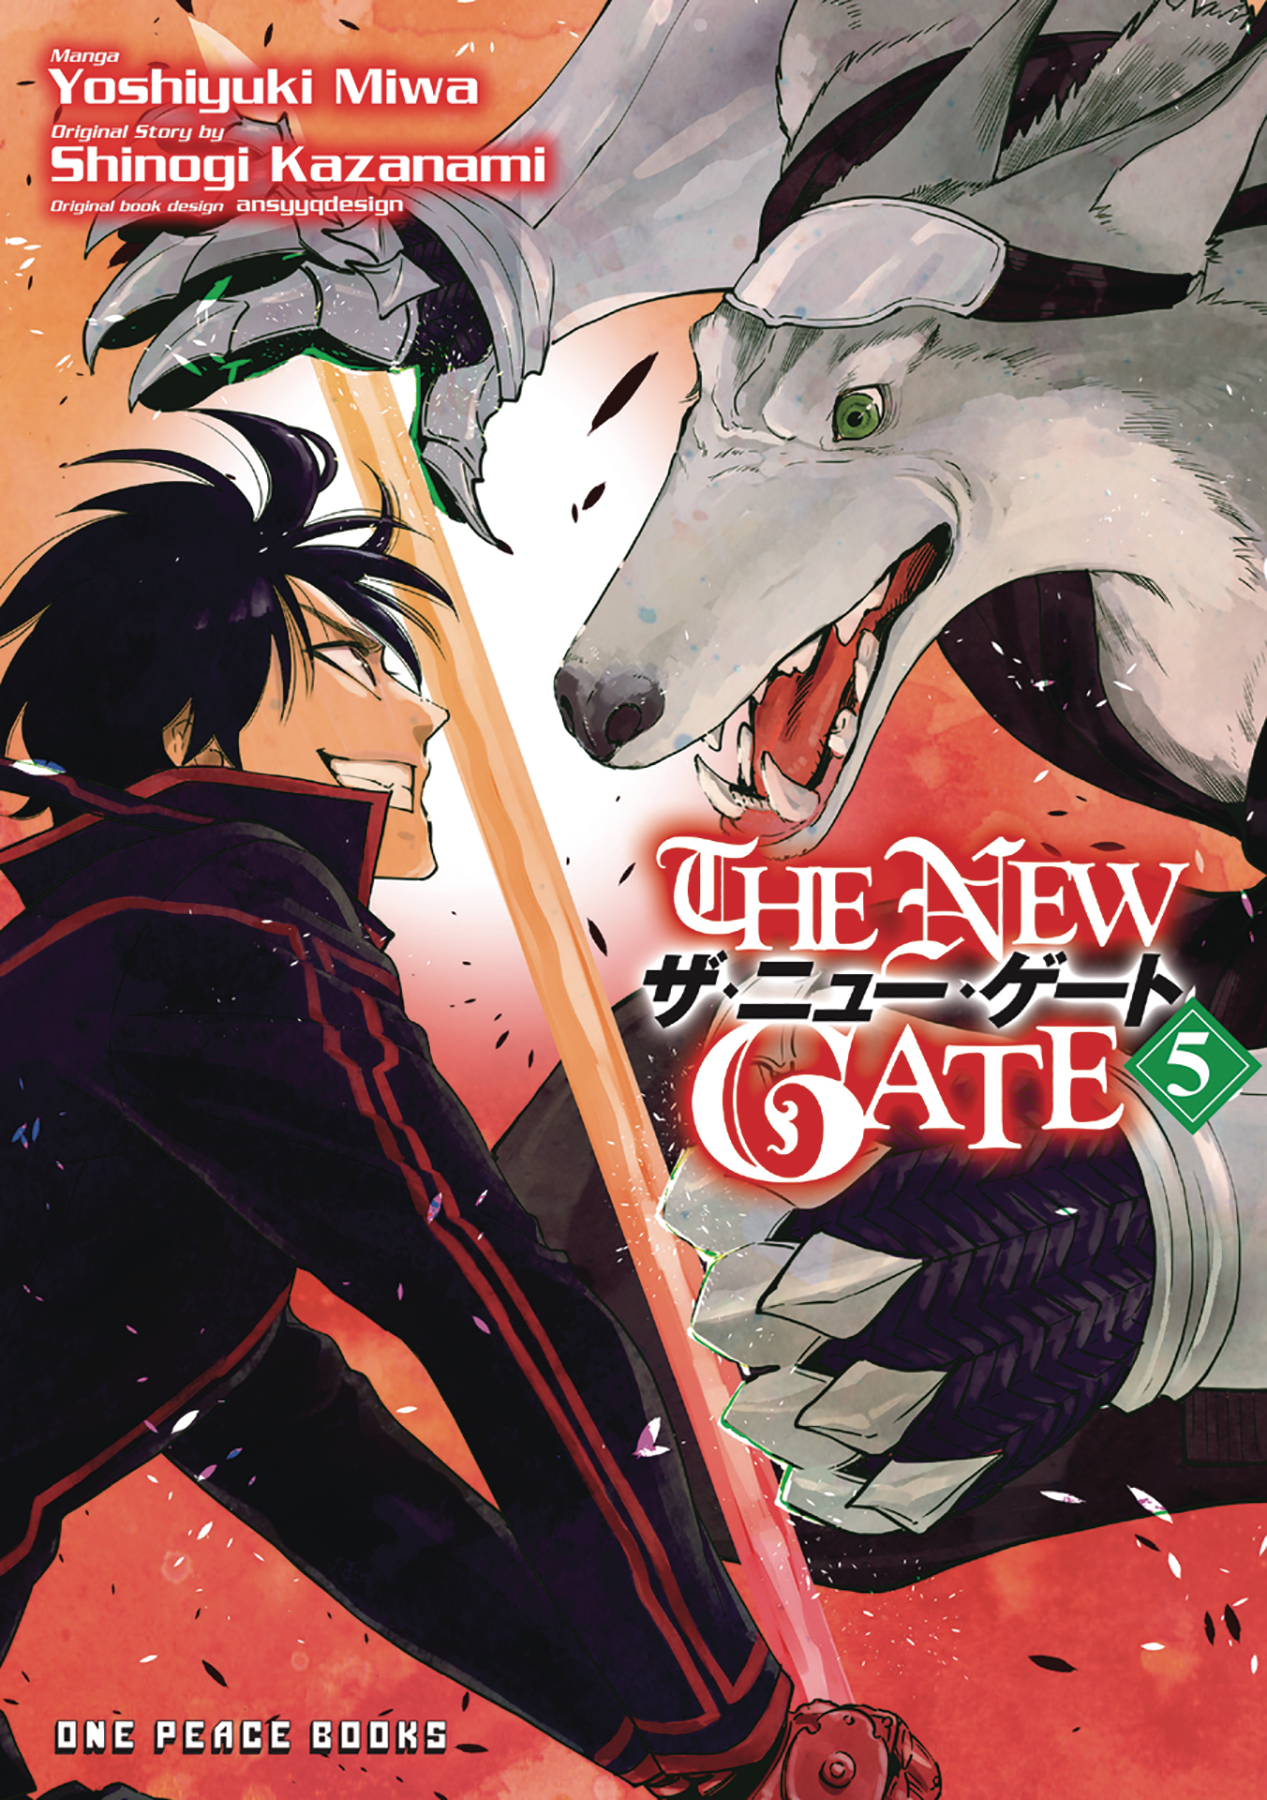 New Gate Manga Graphic Novel Volume 5